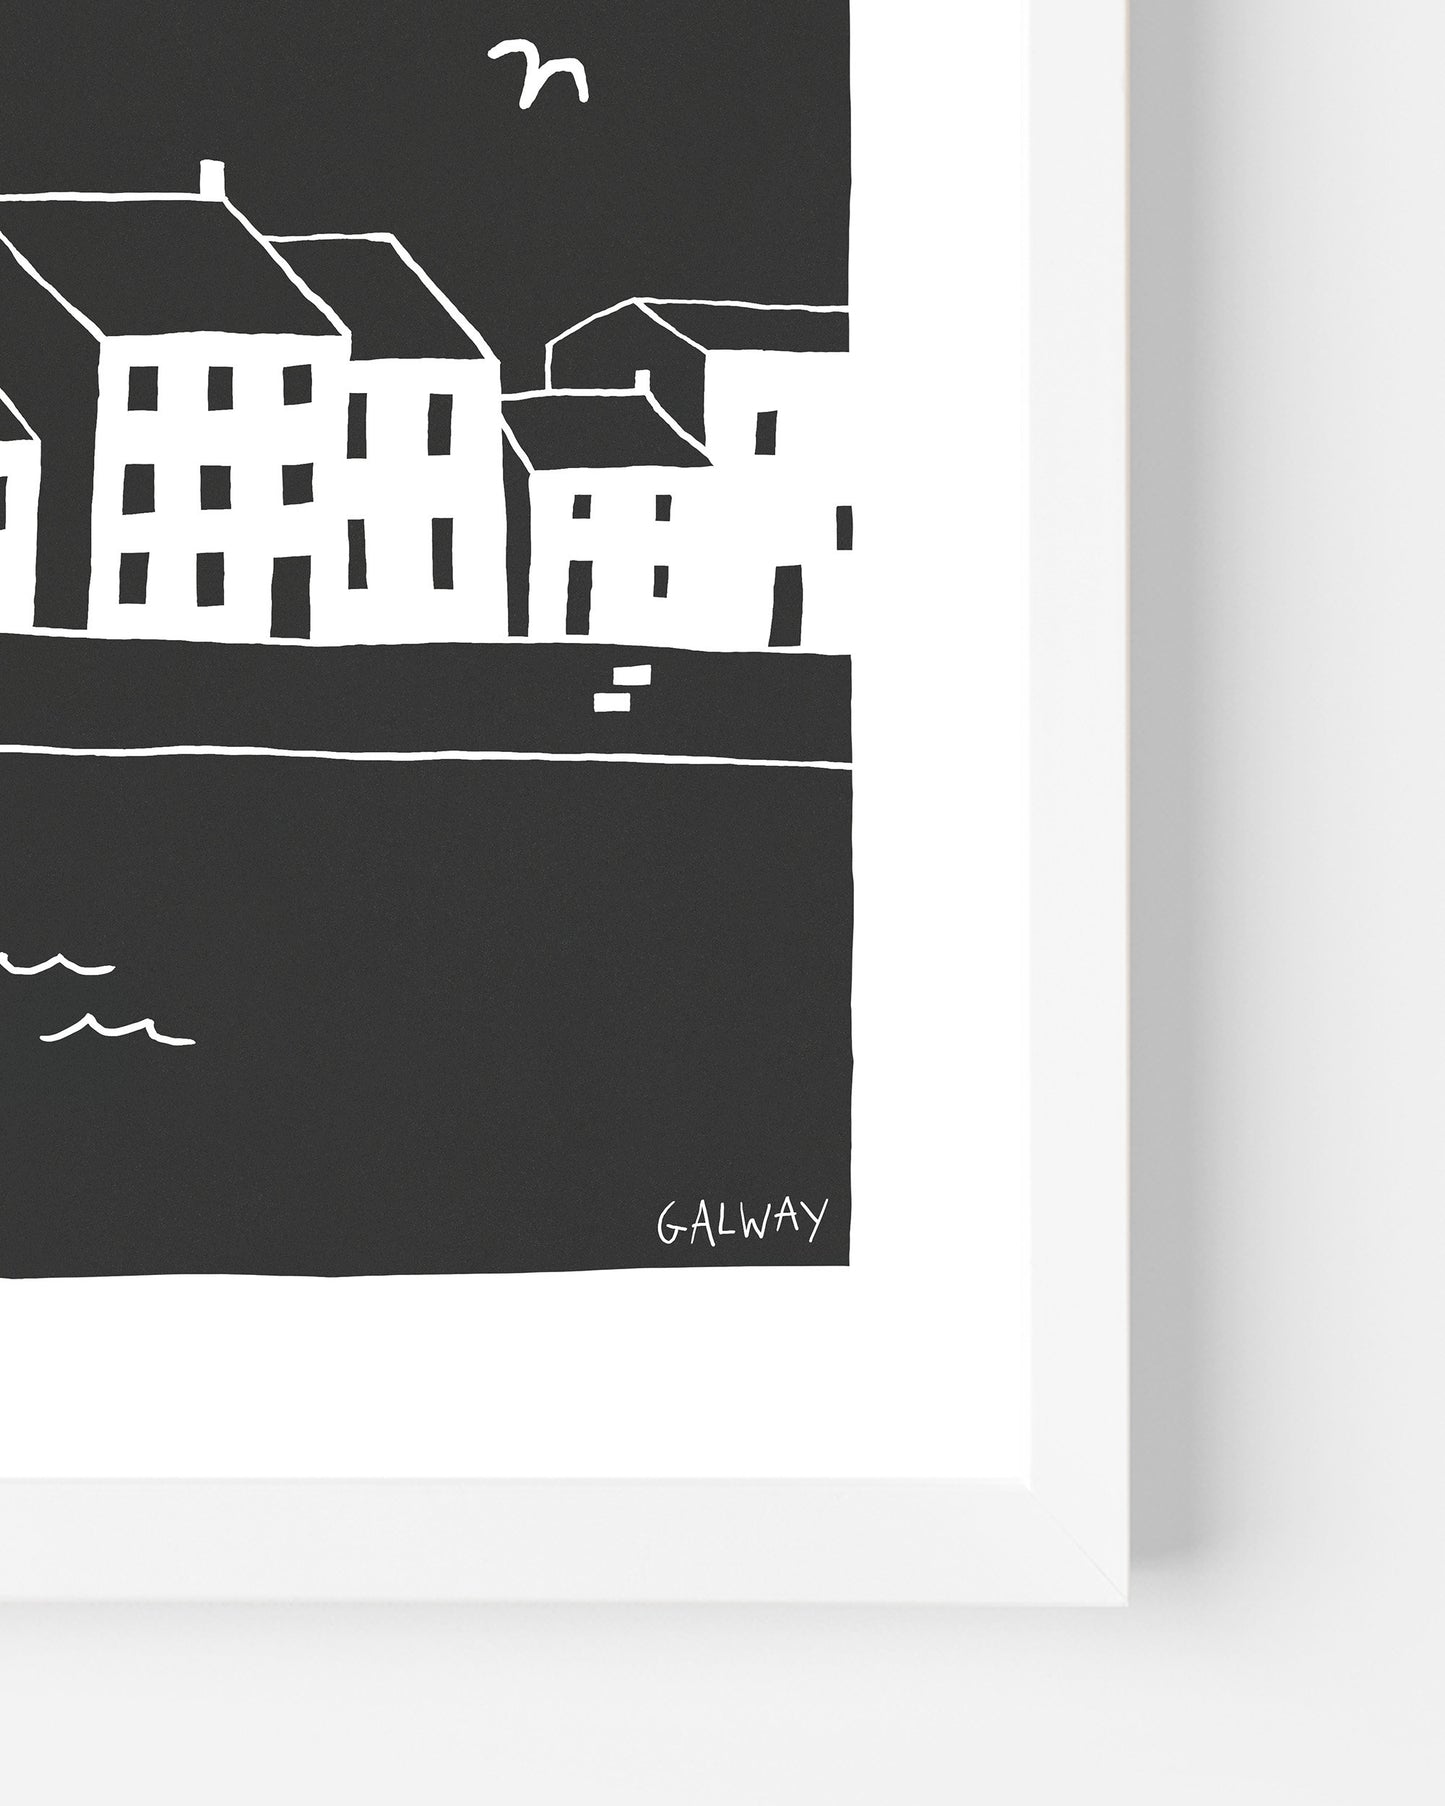 Galway, Ireland – A4 / A3 print, Black & White